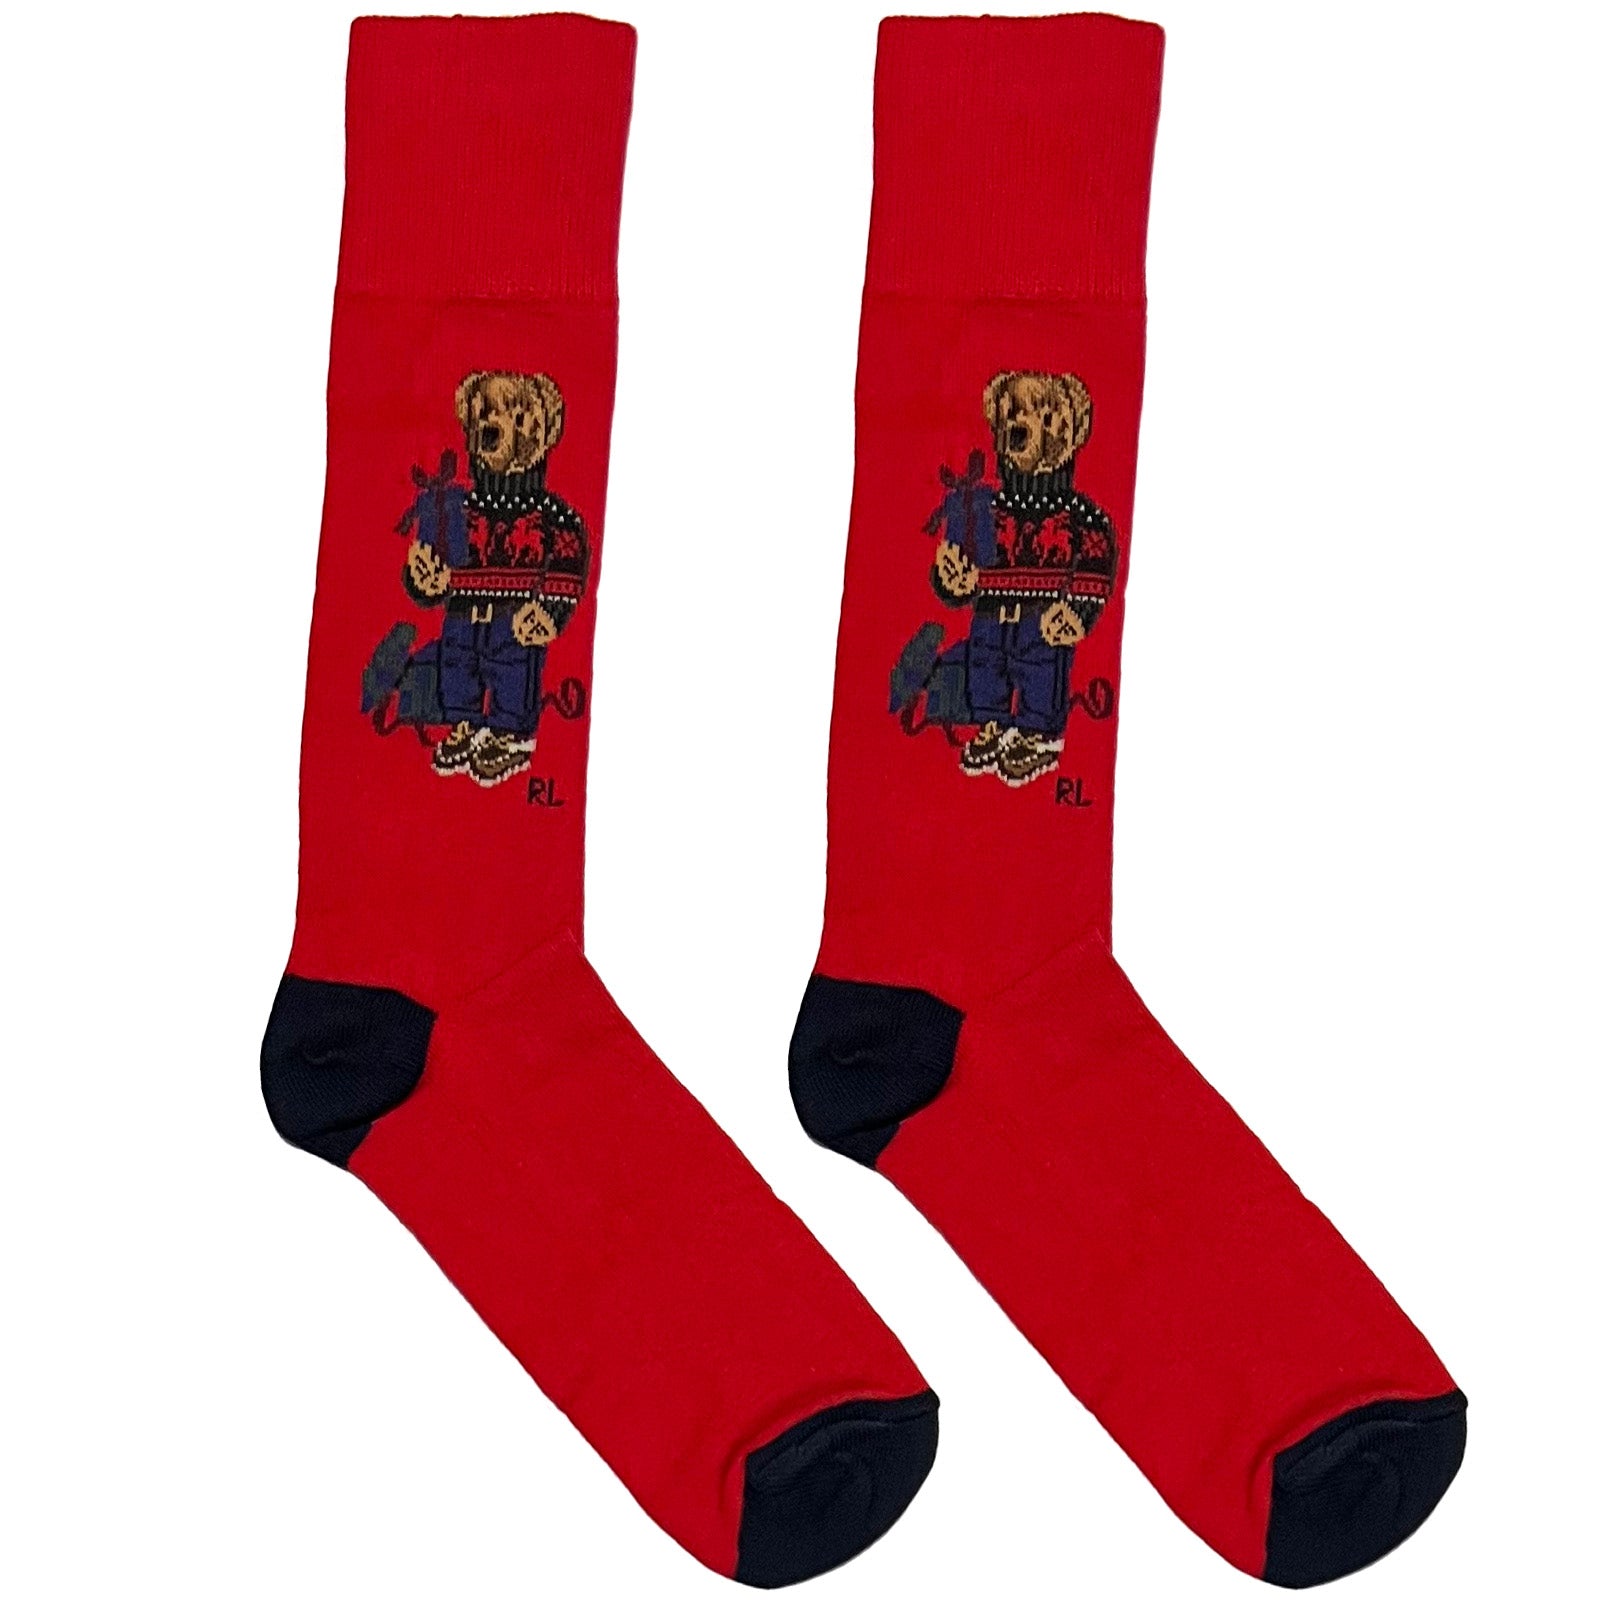 Red RL Polo Gift Character Socks